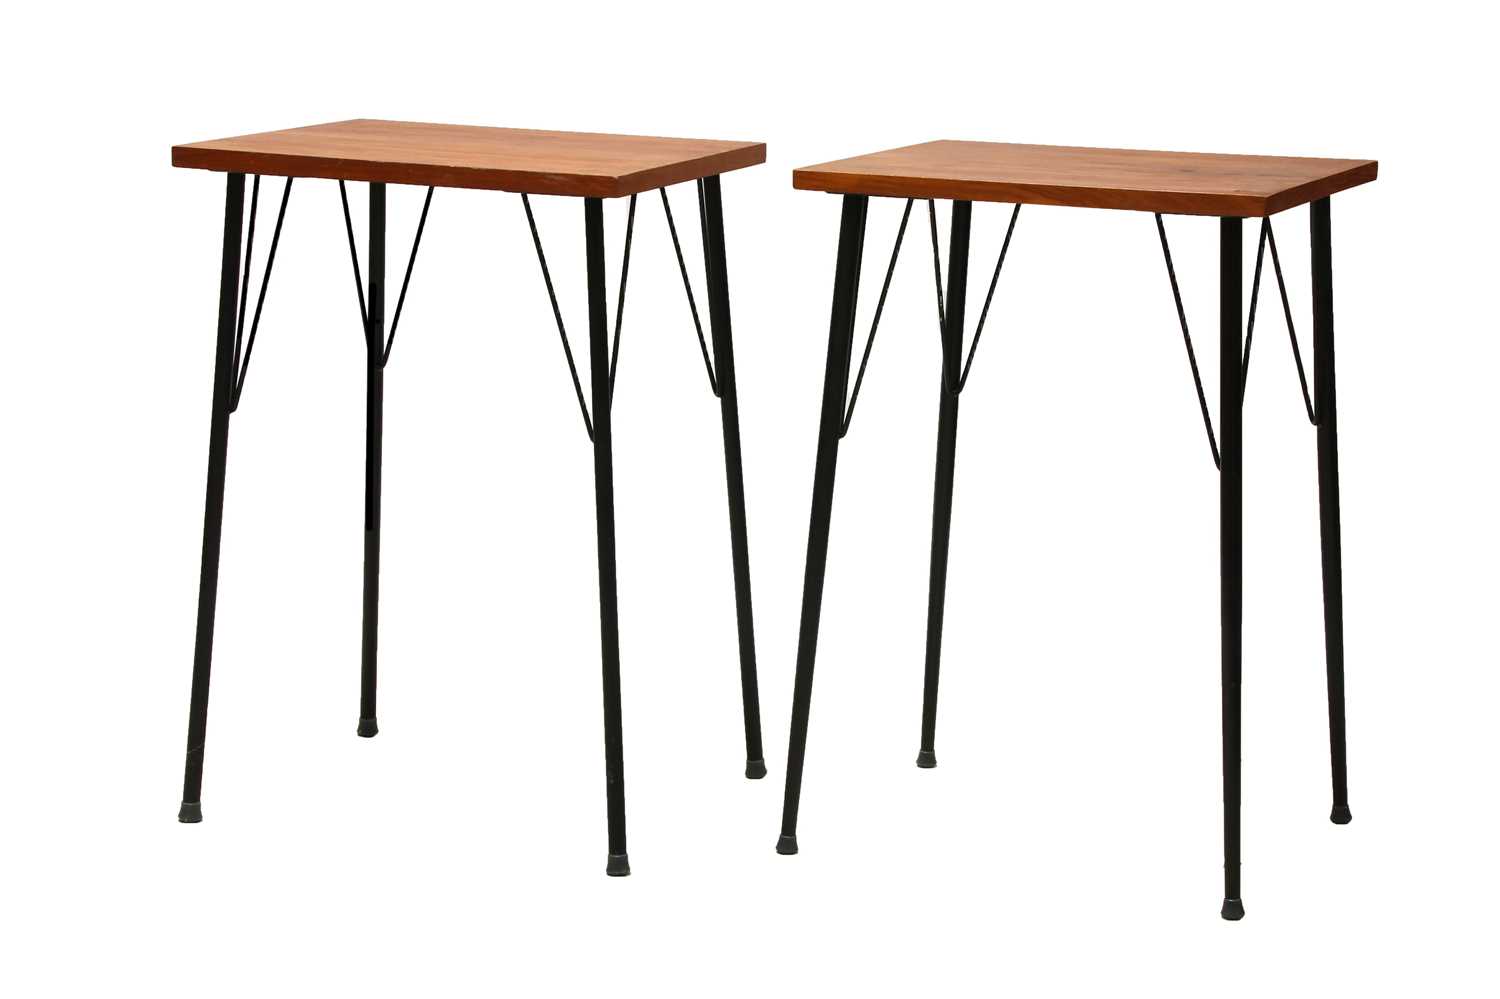 A pair of Danish teak side tables,